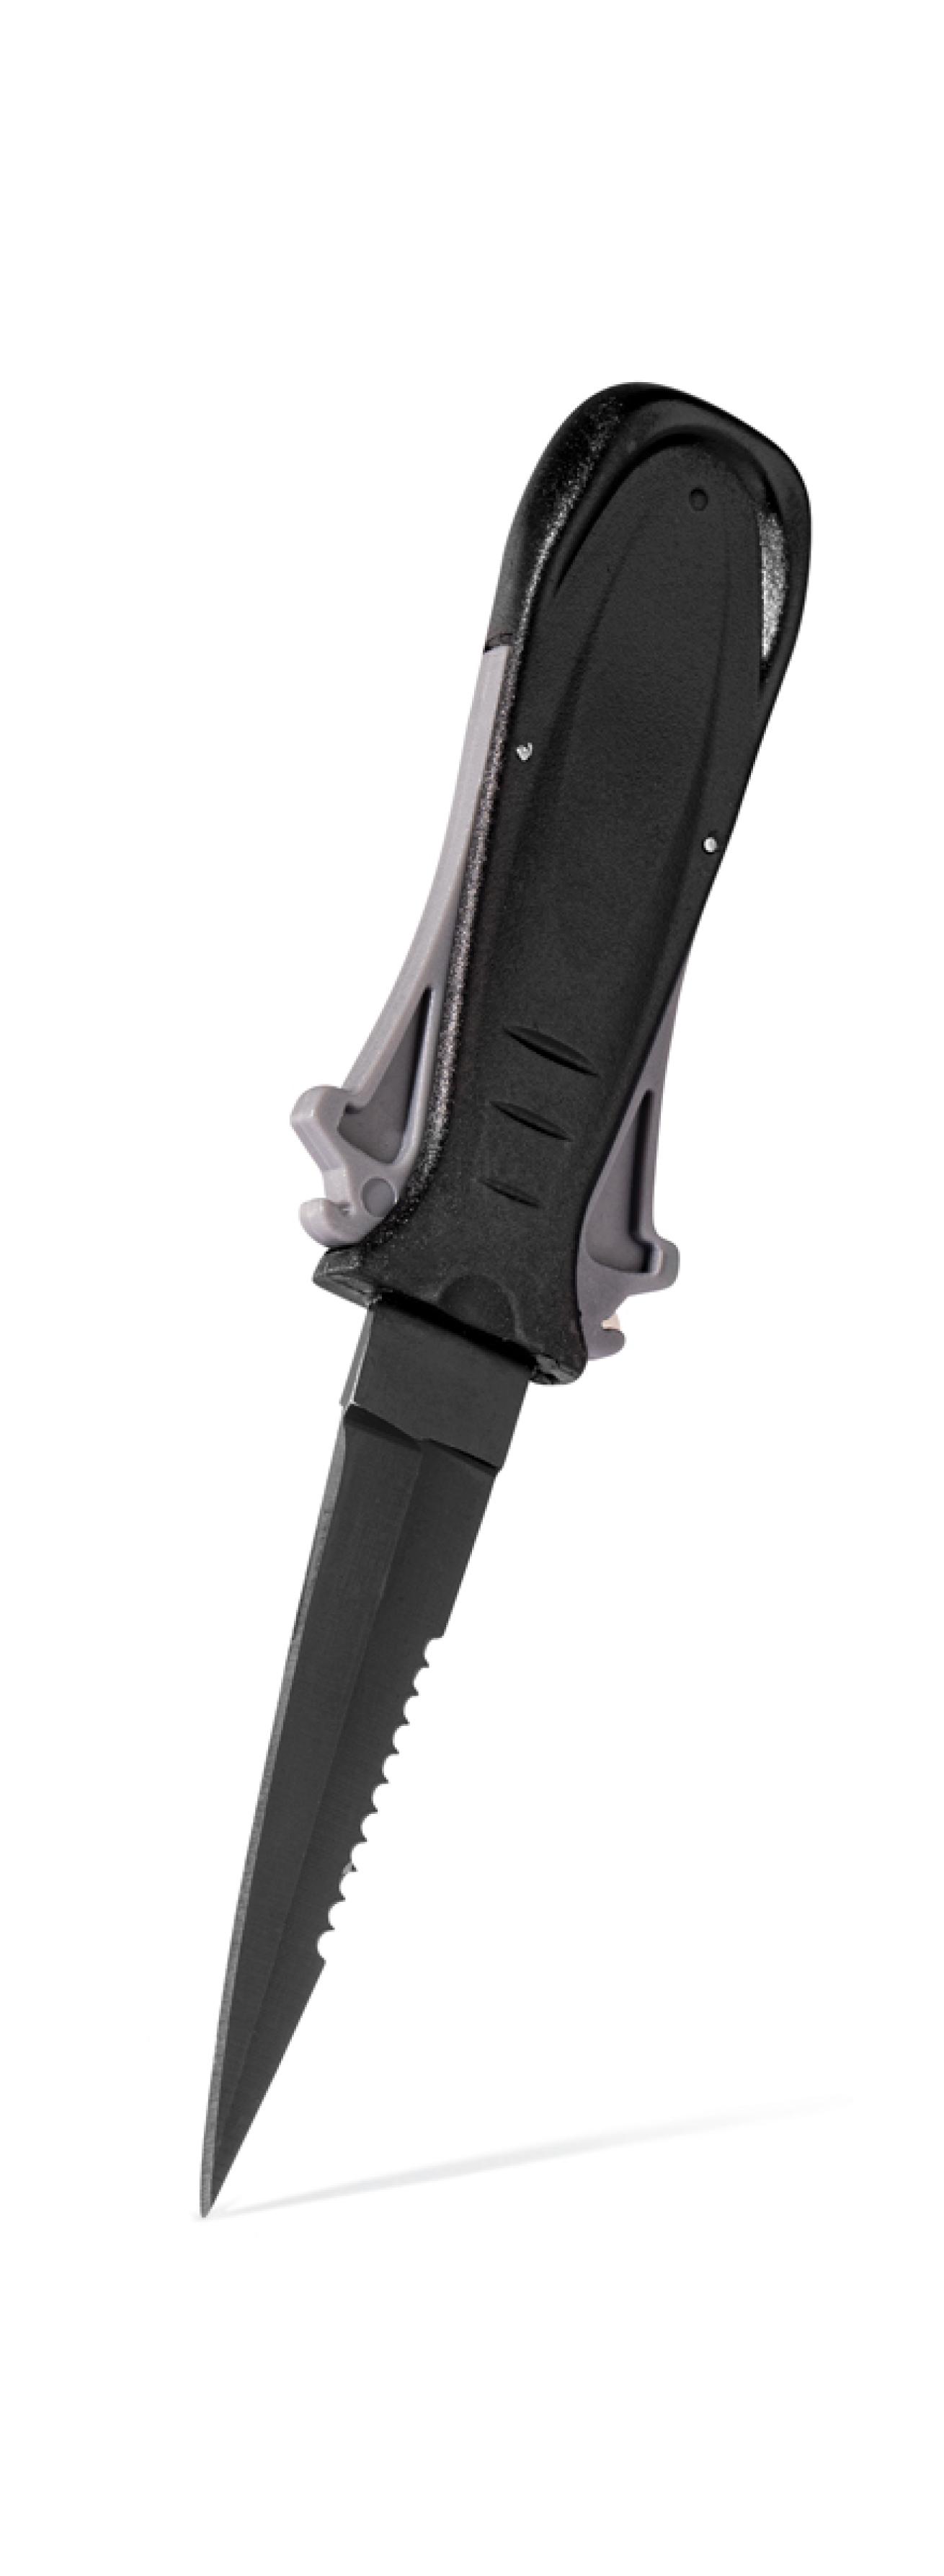  Jero Hunters Knife Set With Soft Grip Handles - 3